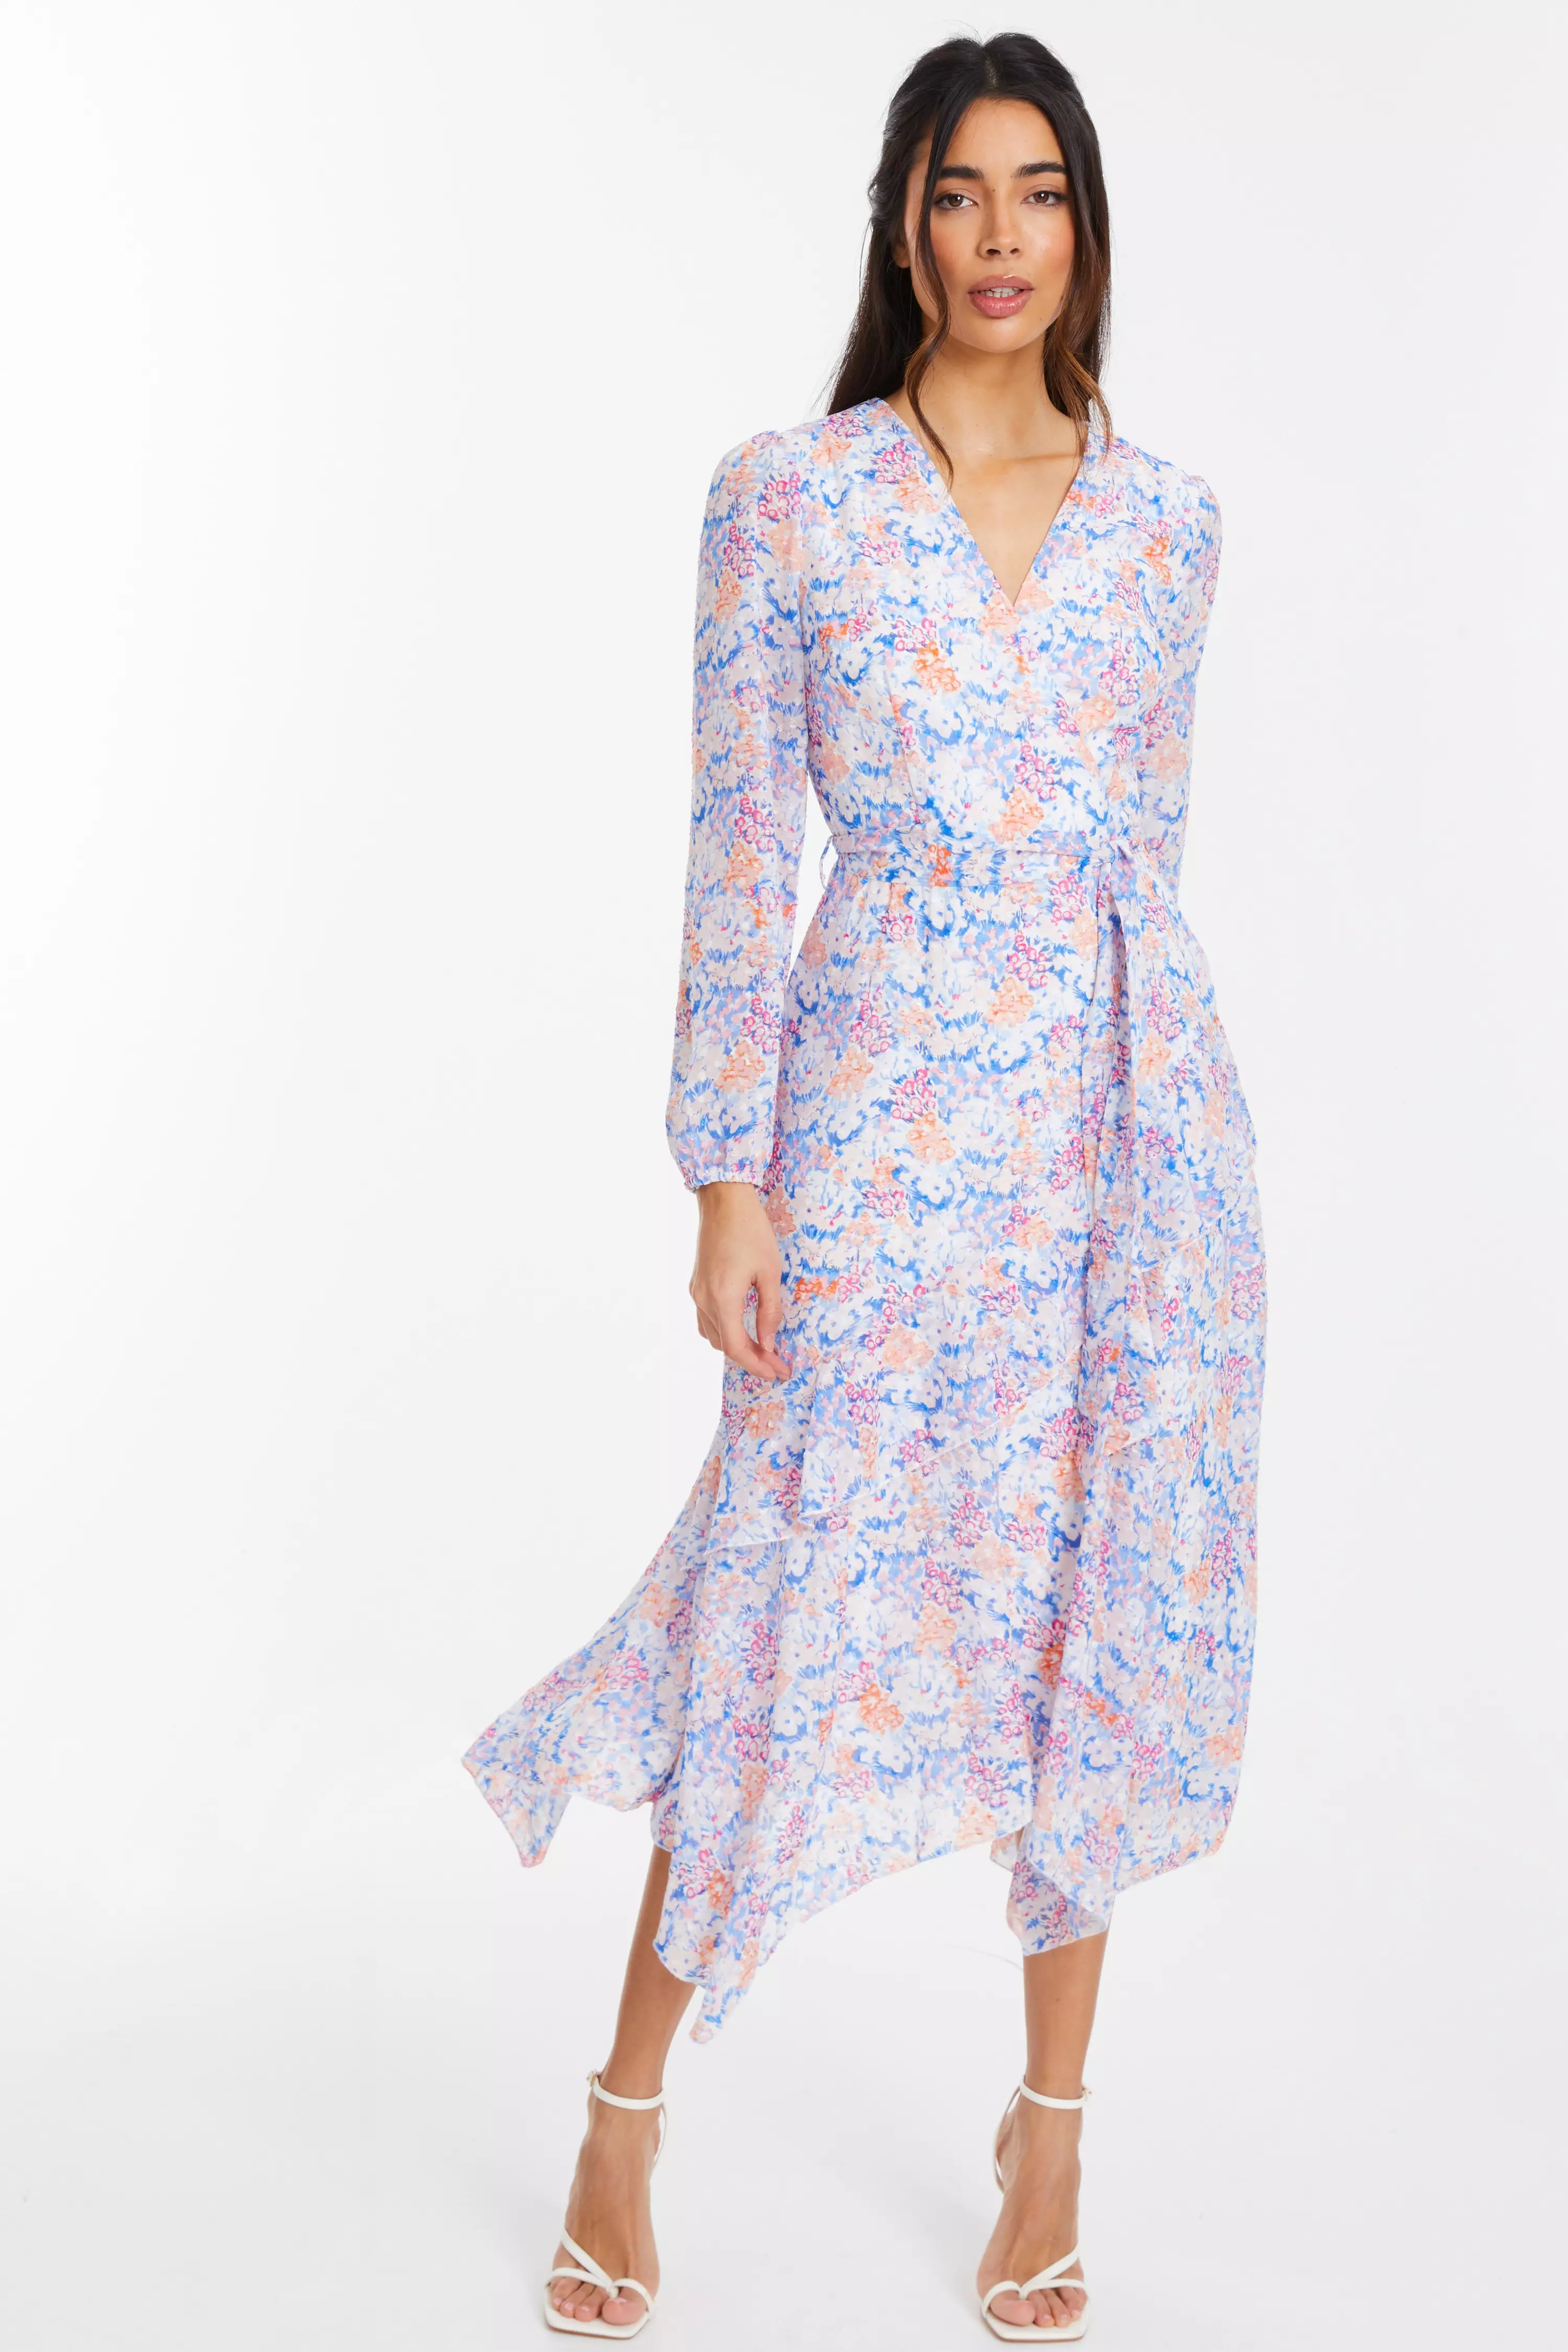 Floral Dresses | Floral Midi & Maxi Dresses for Women | QUIZ